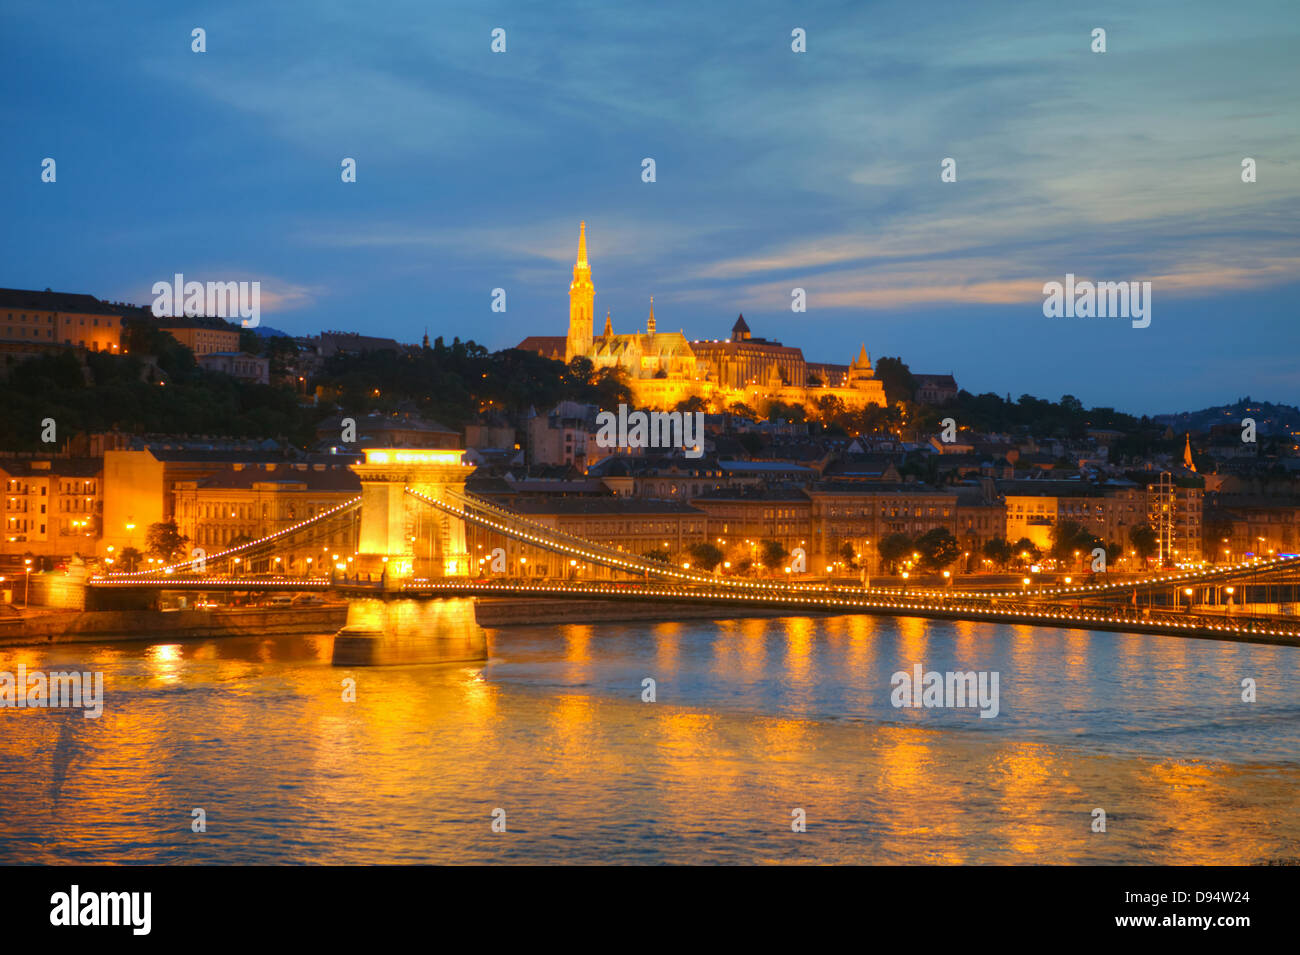 Illumination of Chain Bridge and the Castle area in Budapest, Hungary. Stock Photo